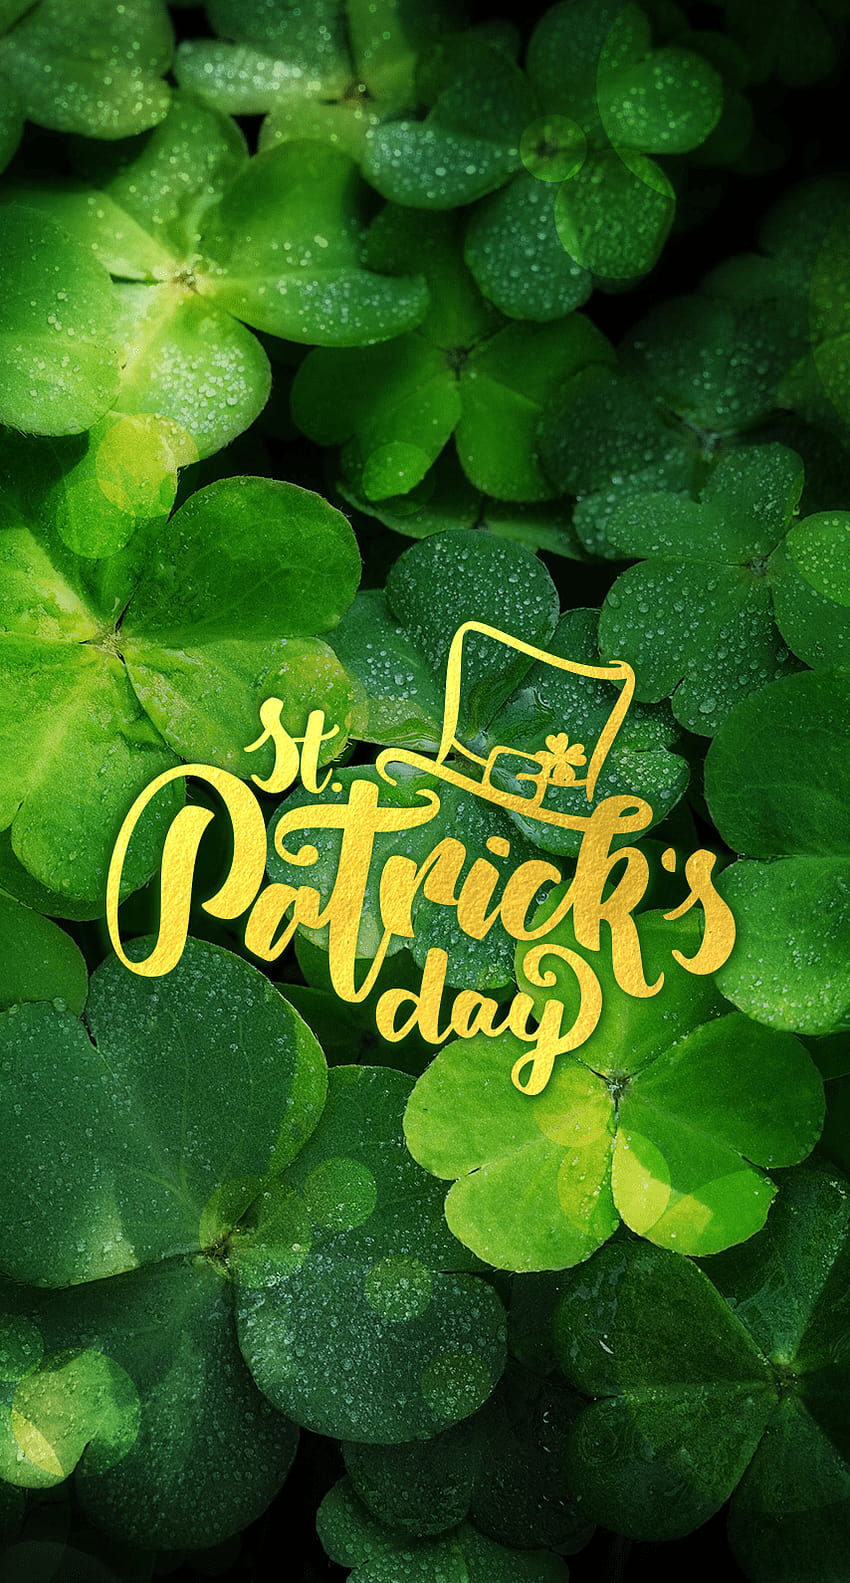 Cute St Patricks Day Backgrounds Stock Illustrations RoyaltyFree Vector  Graphics  Clip Art  iStock